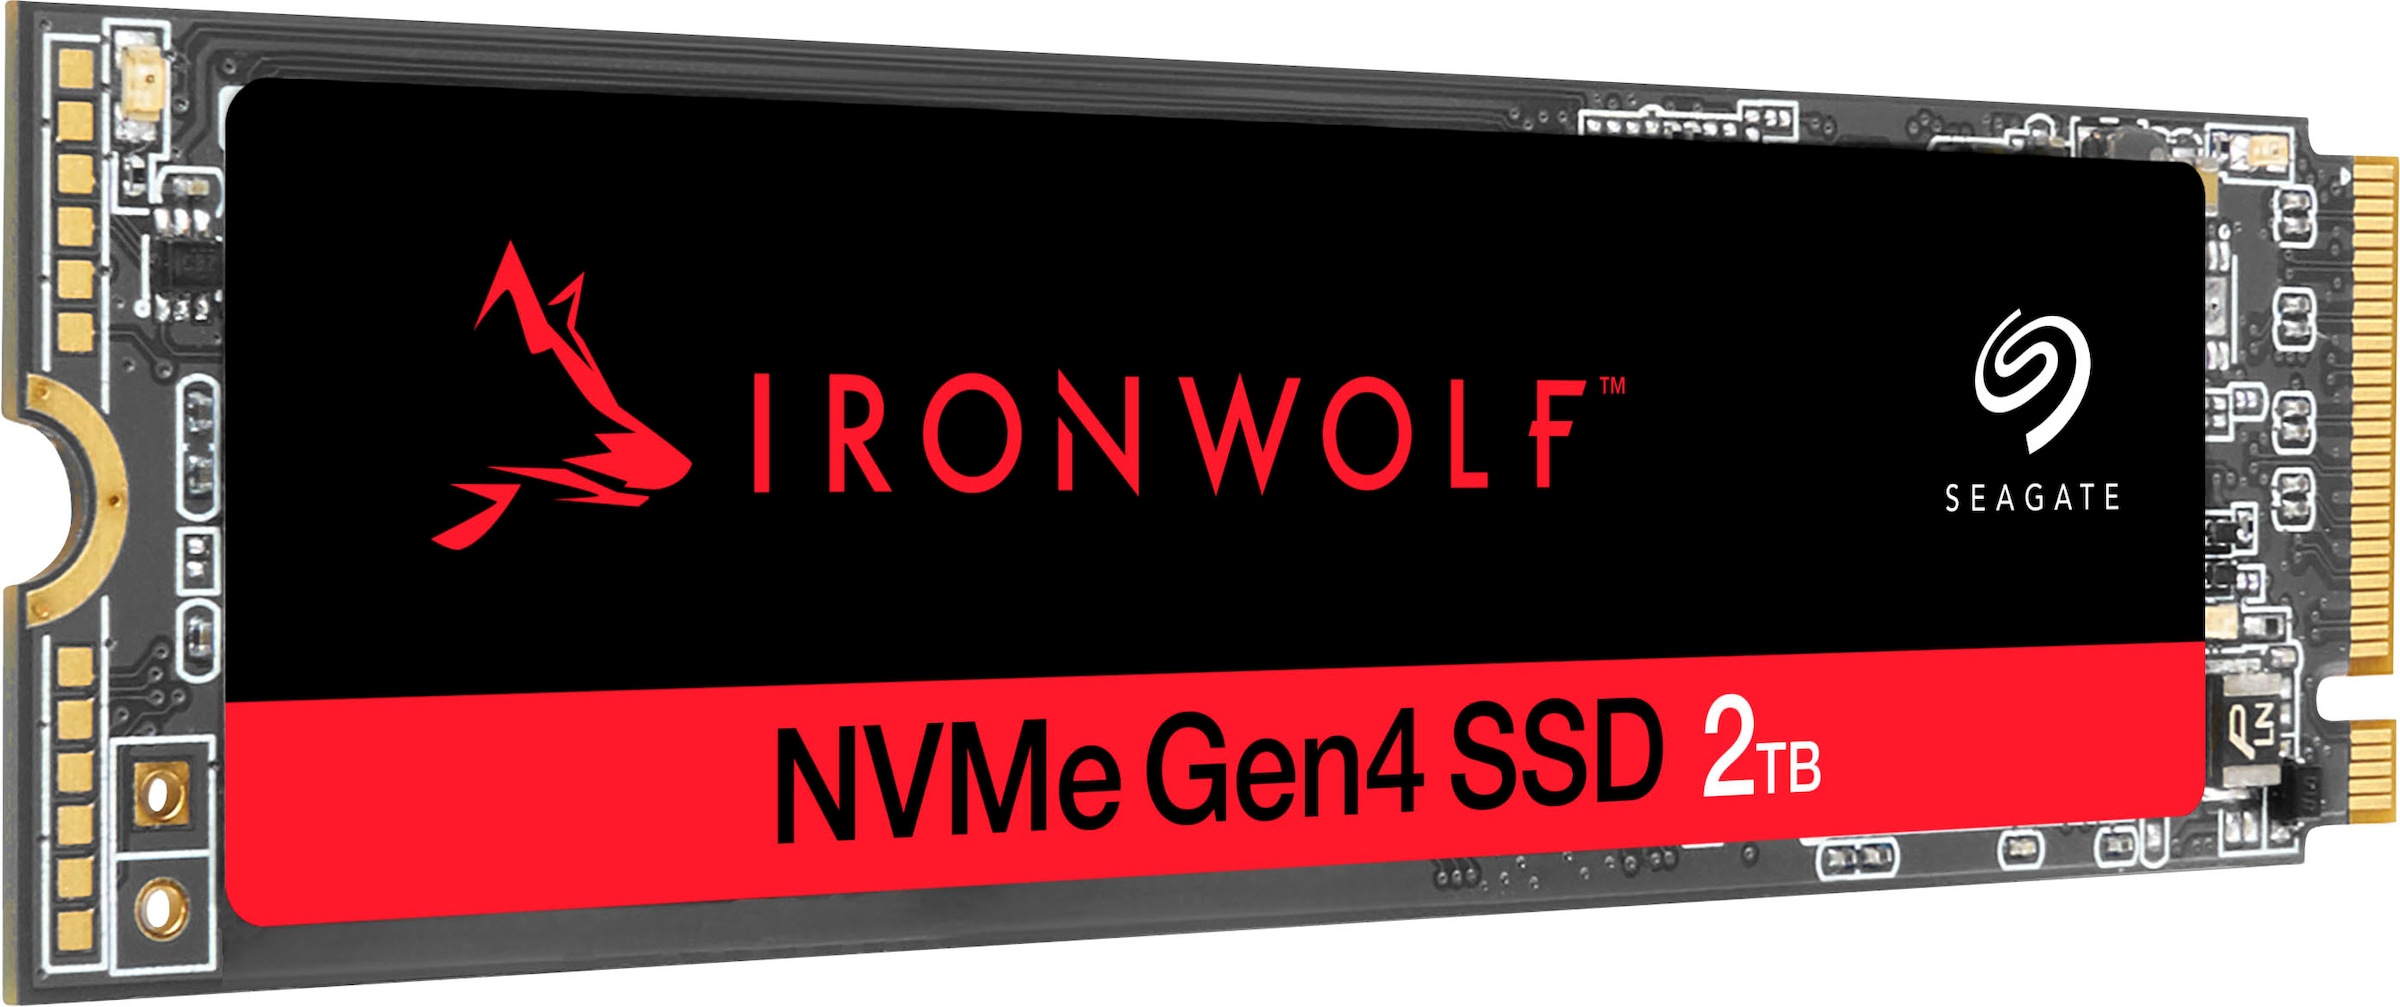 Seagate interne SSD »IronWolf®525«